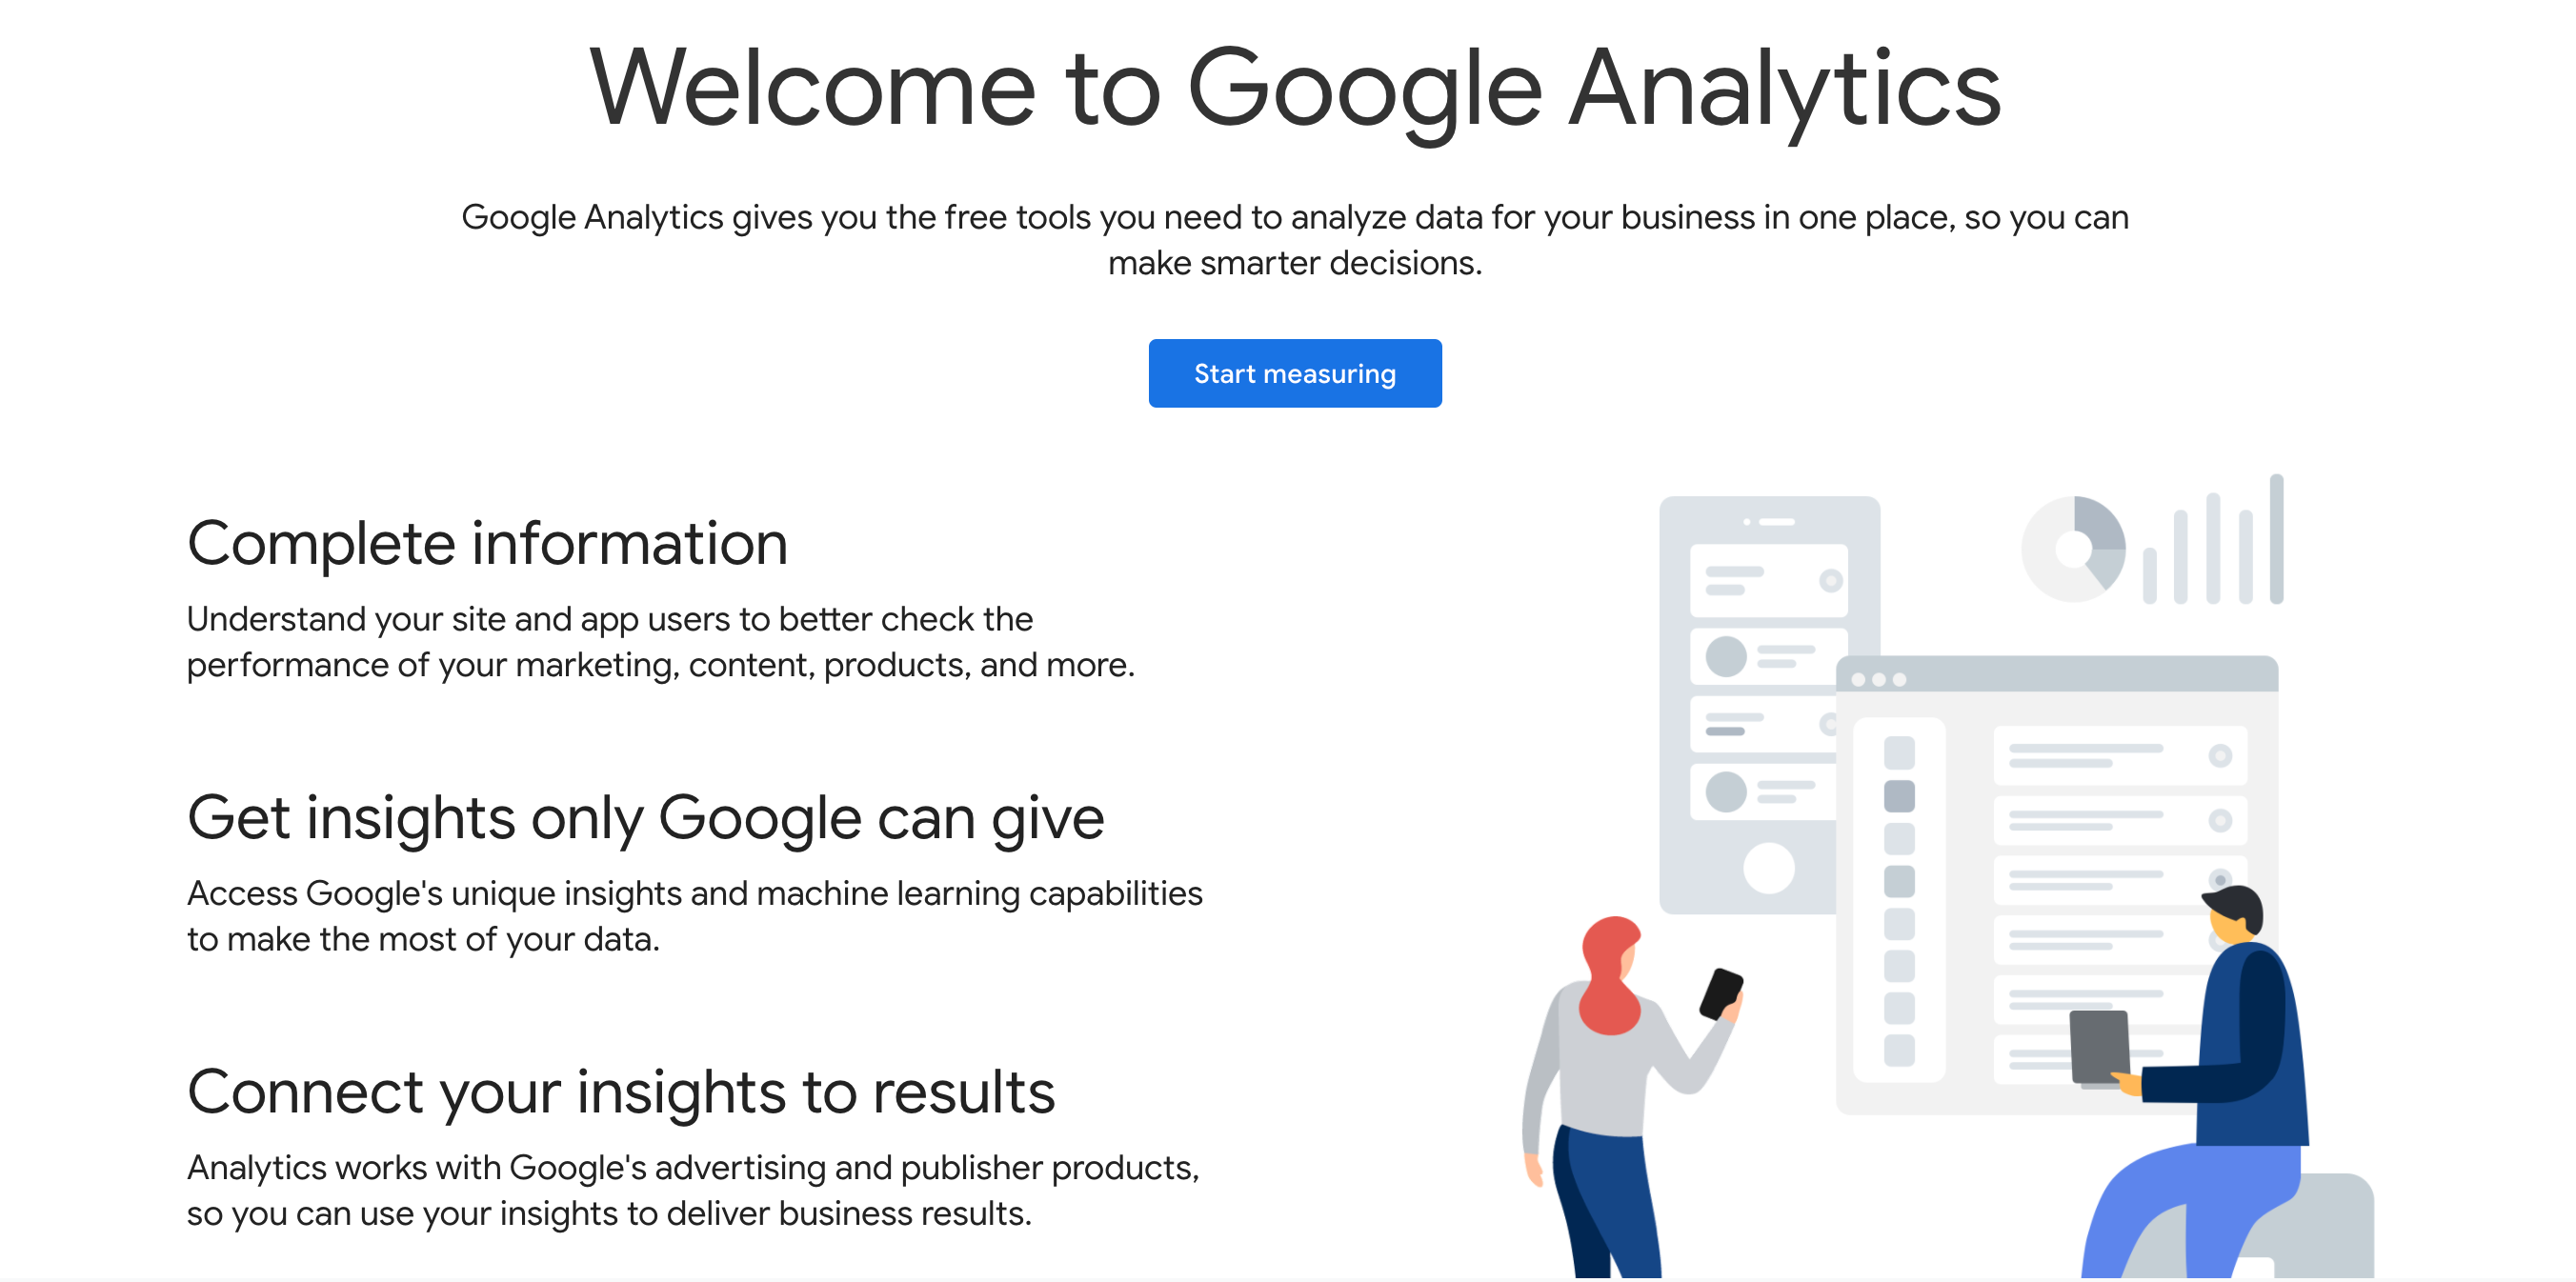 Google Analytics as an alternative to Mixpanel